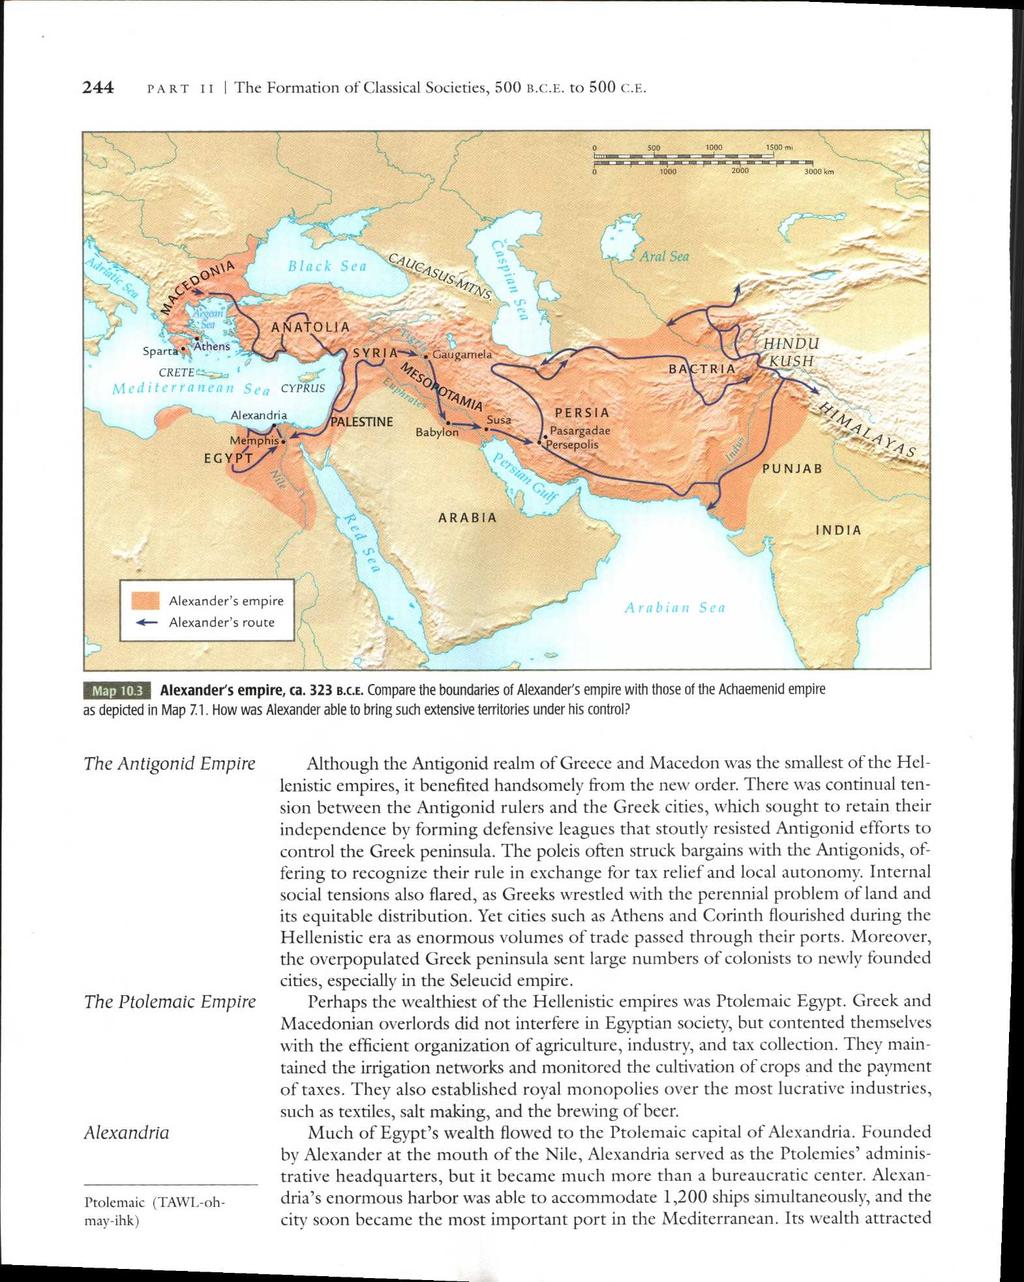 244 PART II I The Formation of Classical Societies, 500 B.C.E. to 500 C.F. 500 1000 1500 mi 1000 2000 3000 km Sparta Athens CRETE. Al exan d ri a Mdn14. EGYPTj e"-th ANATOLIA CYPRUS SYRIA--4.